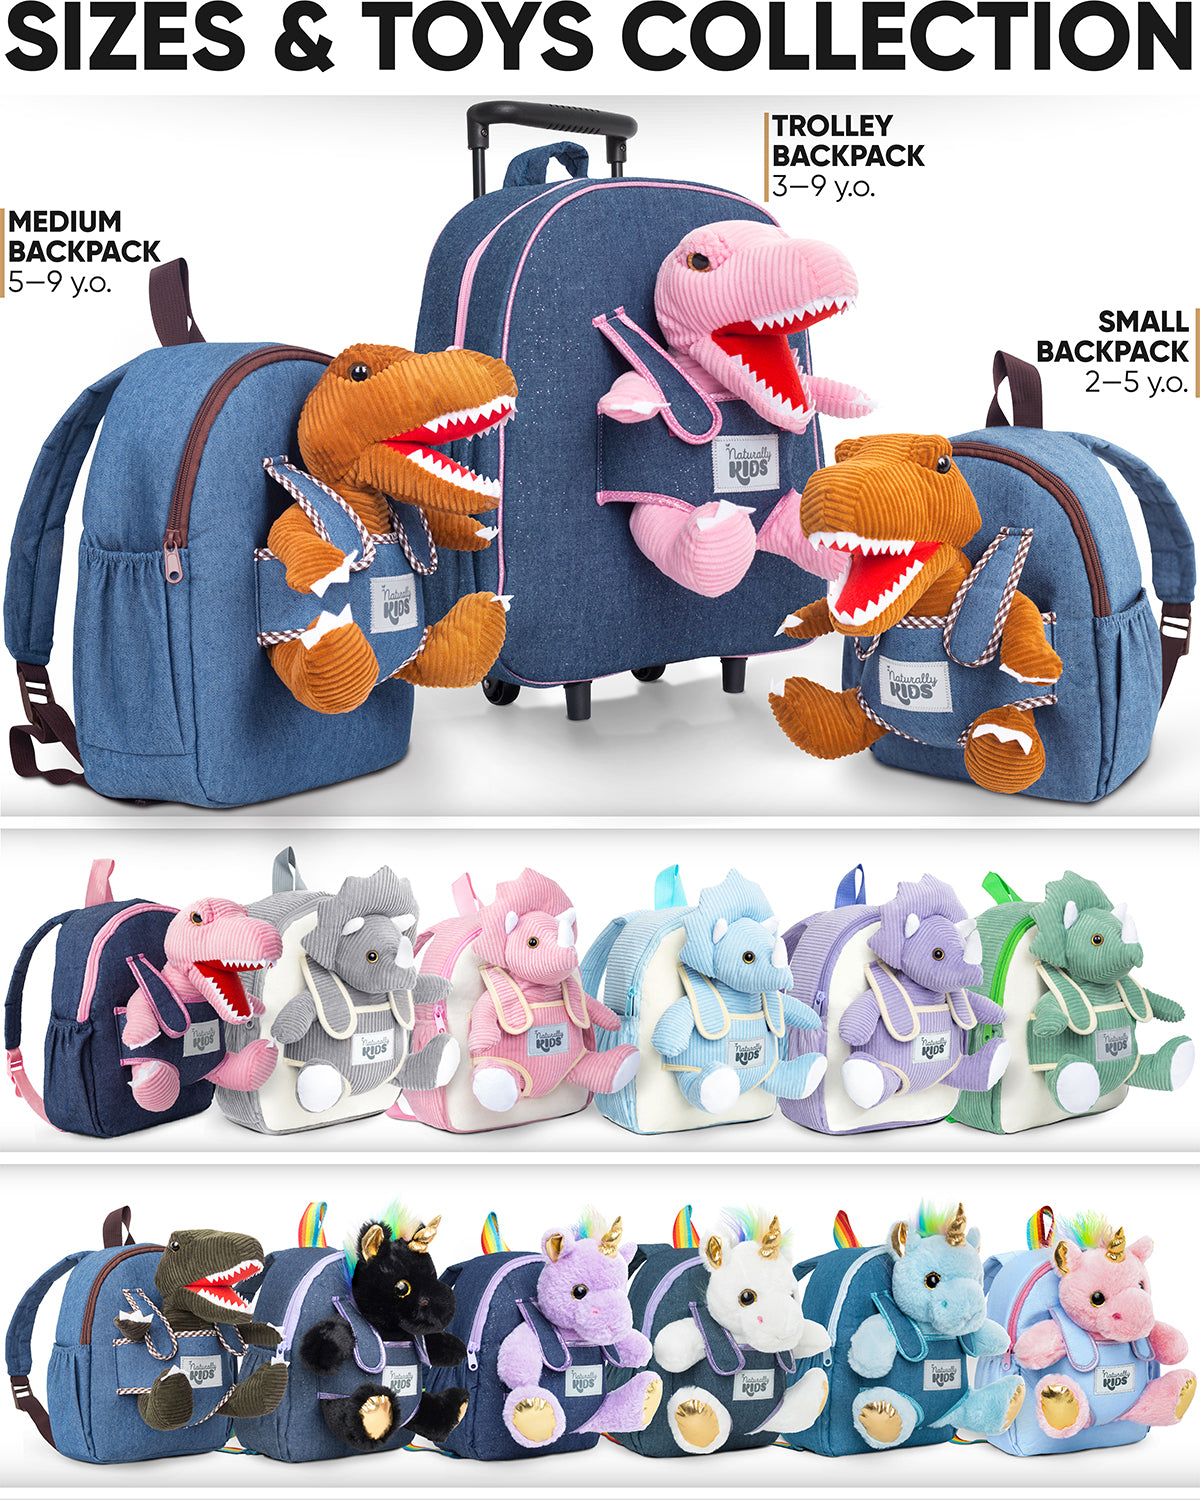 17-inch Dinosaur Backpack Bundle